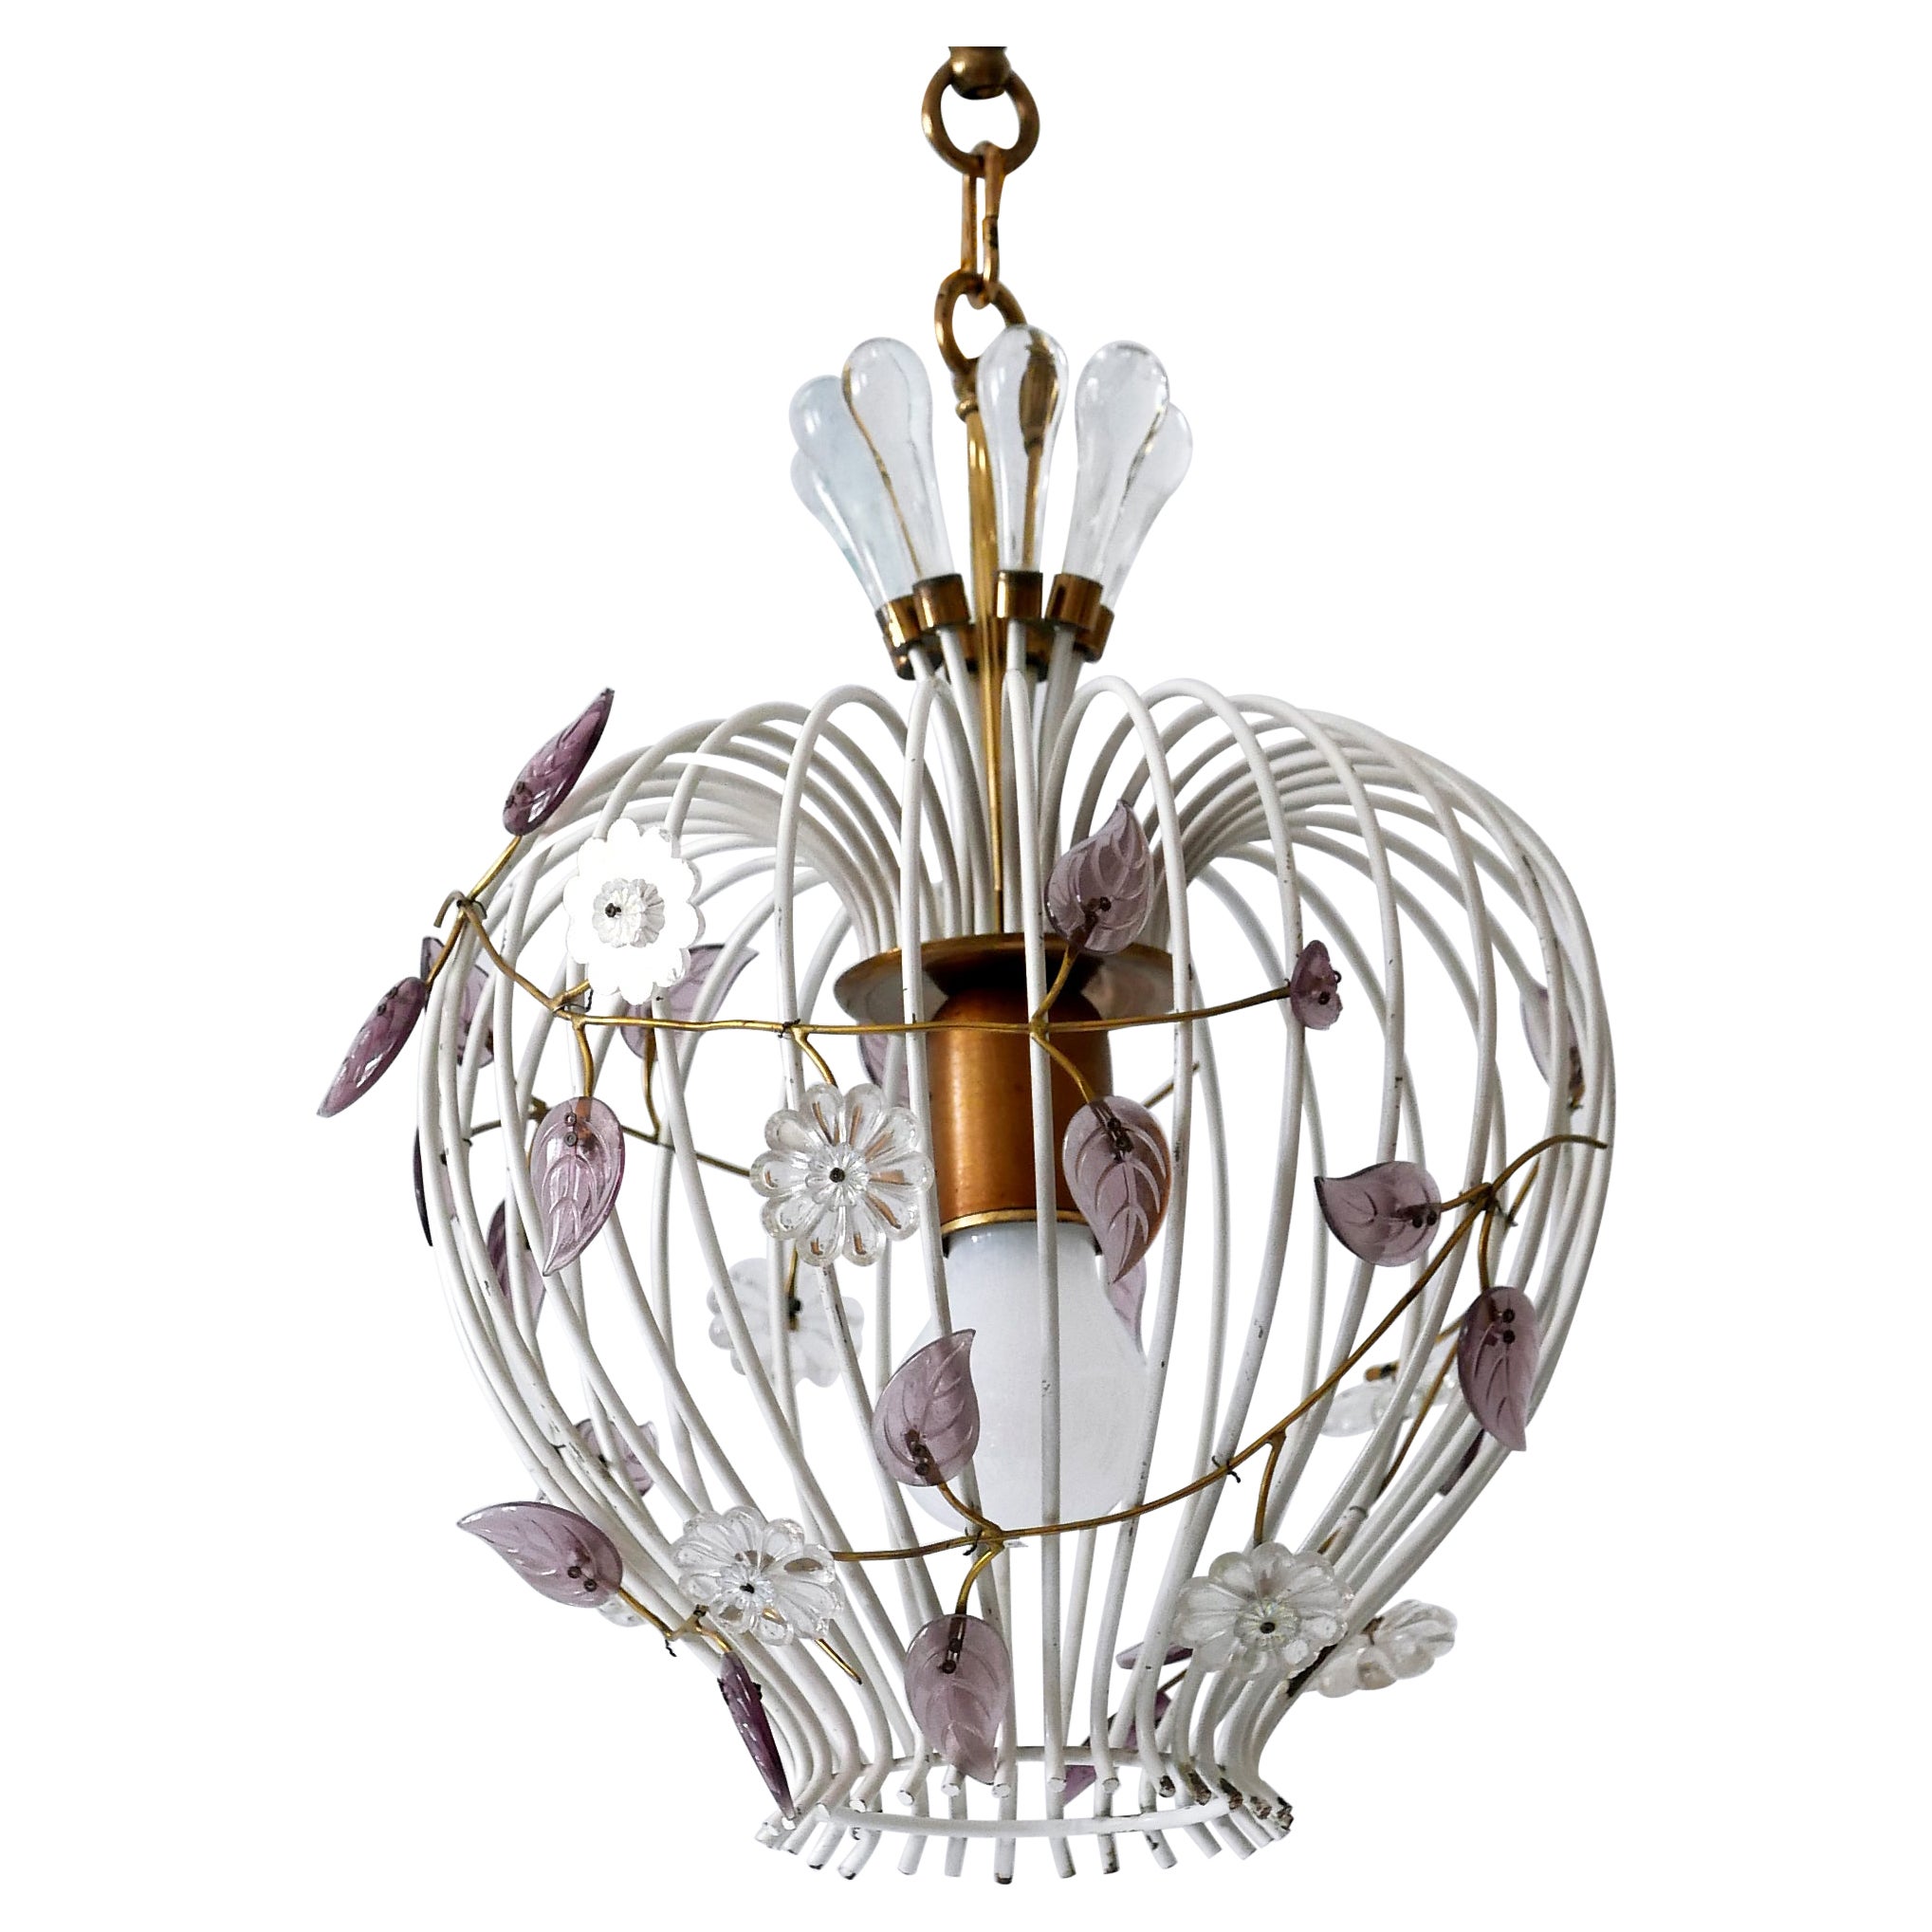 Lovely Mid-Century Modern Birdcage Pendant Lamp or Chandelier Germany 1950s